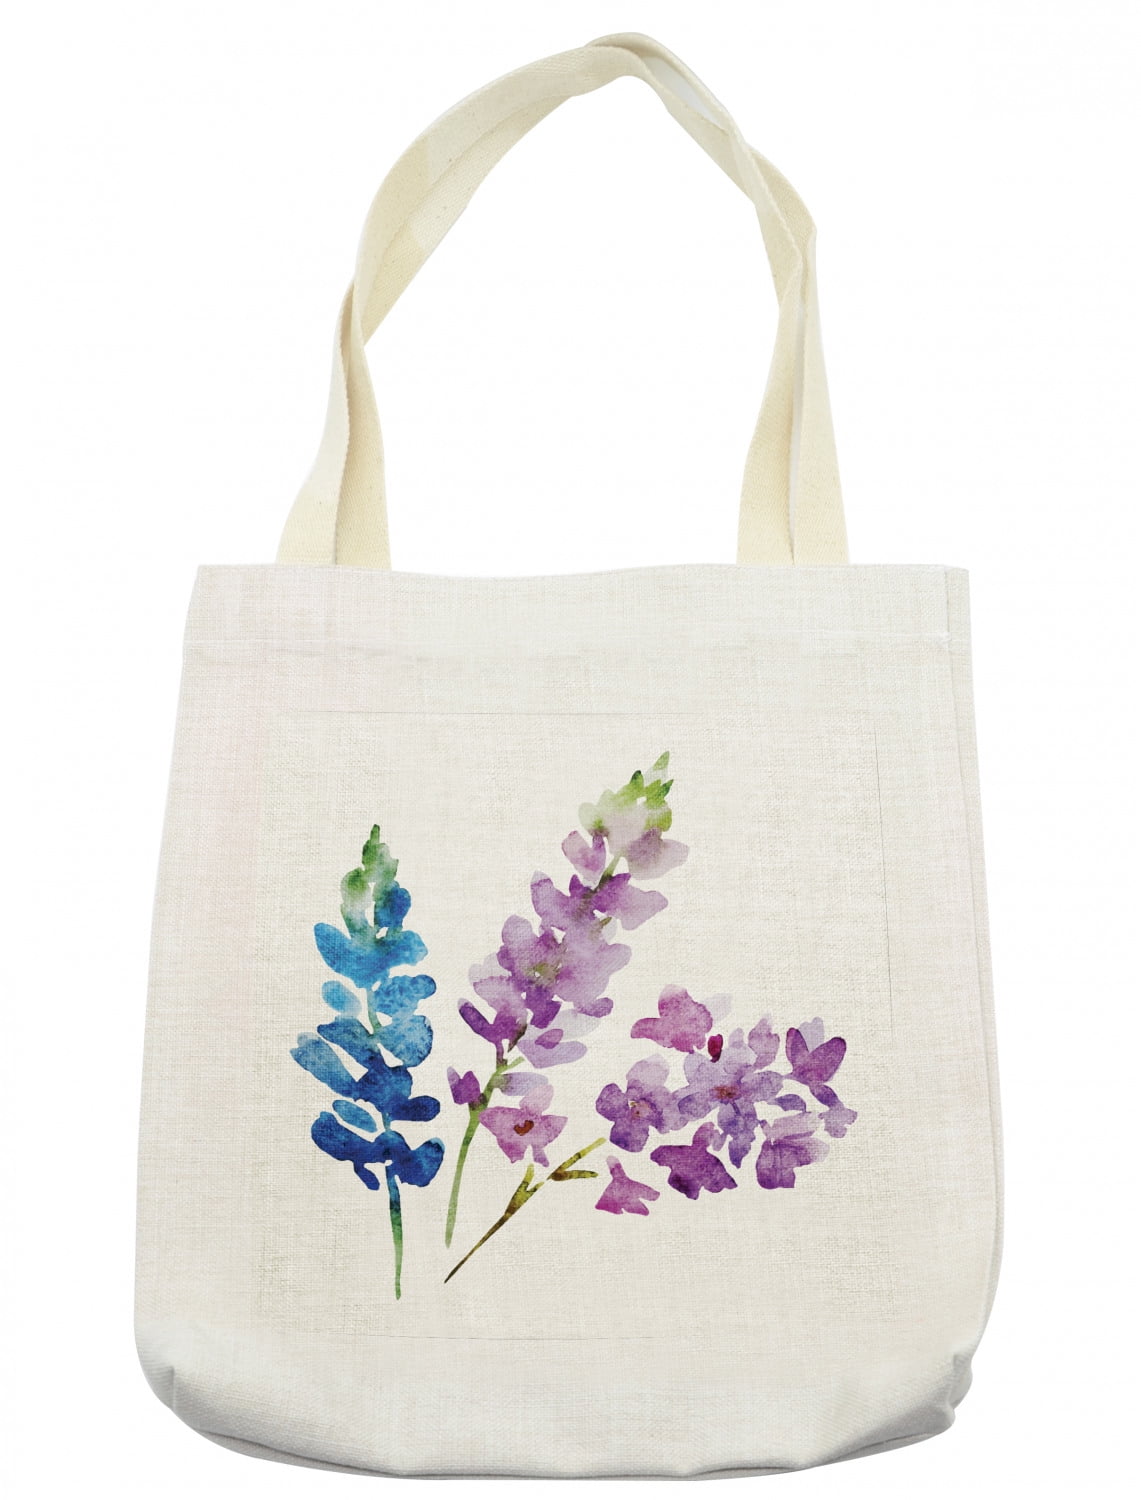 Shopping Bag Personalized Watercolor Floral Tote Bag Book Tote Bag Travel Bag Flower Bag Floral Bag Reusable Tote Bag Market Bag